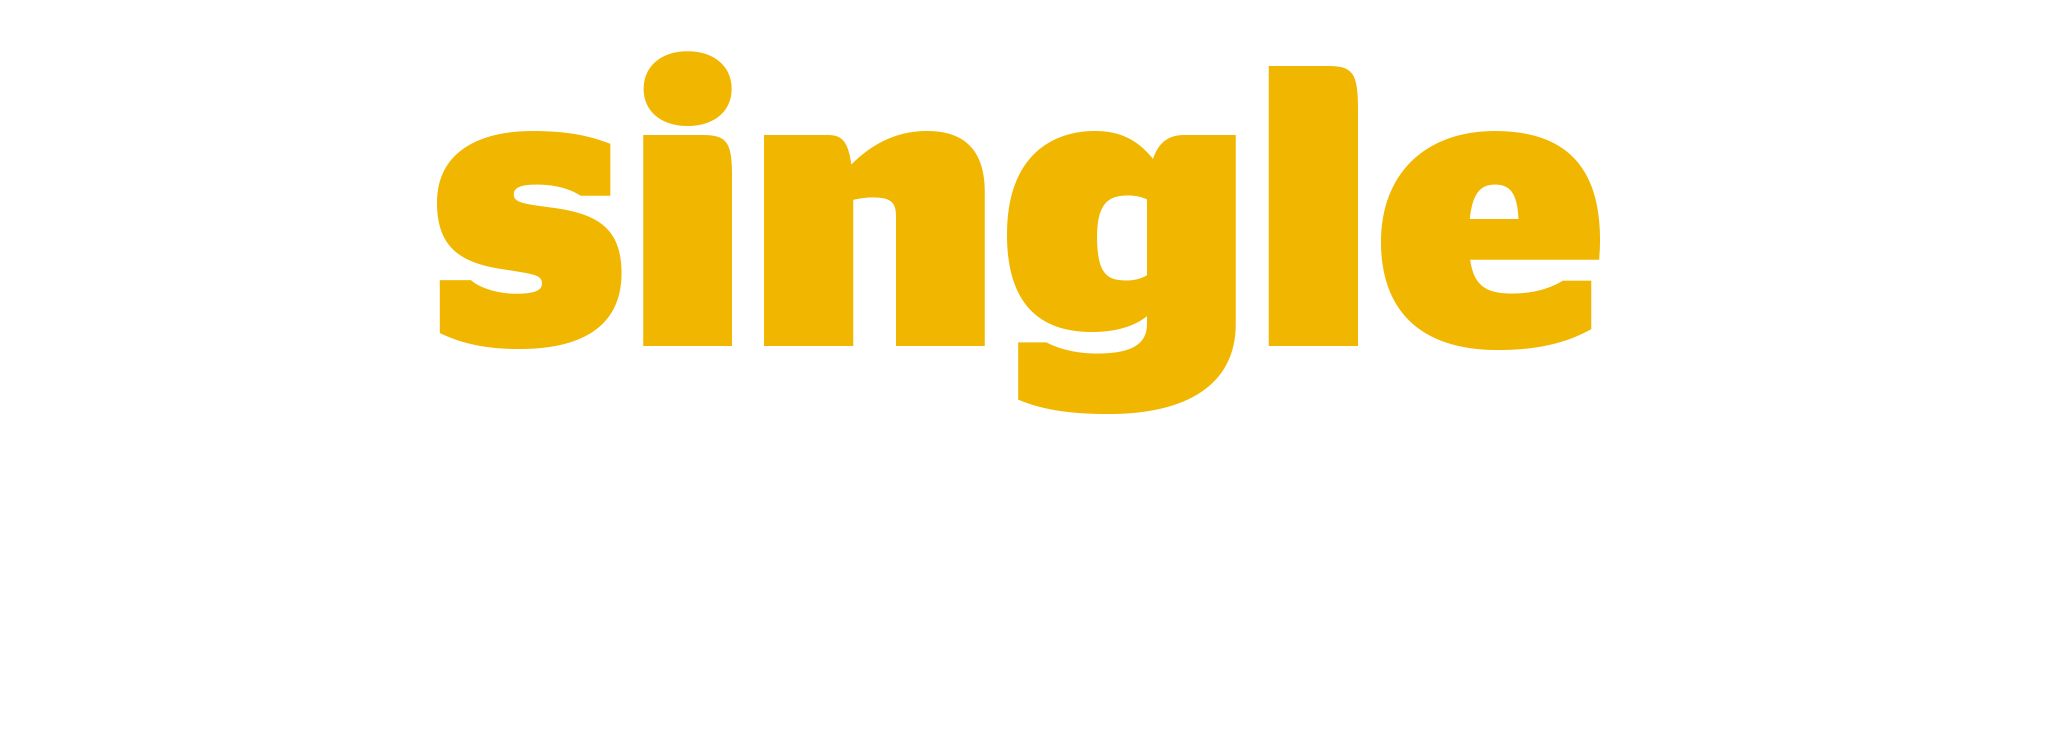 single mattresses